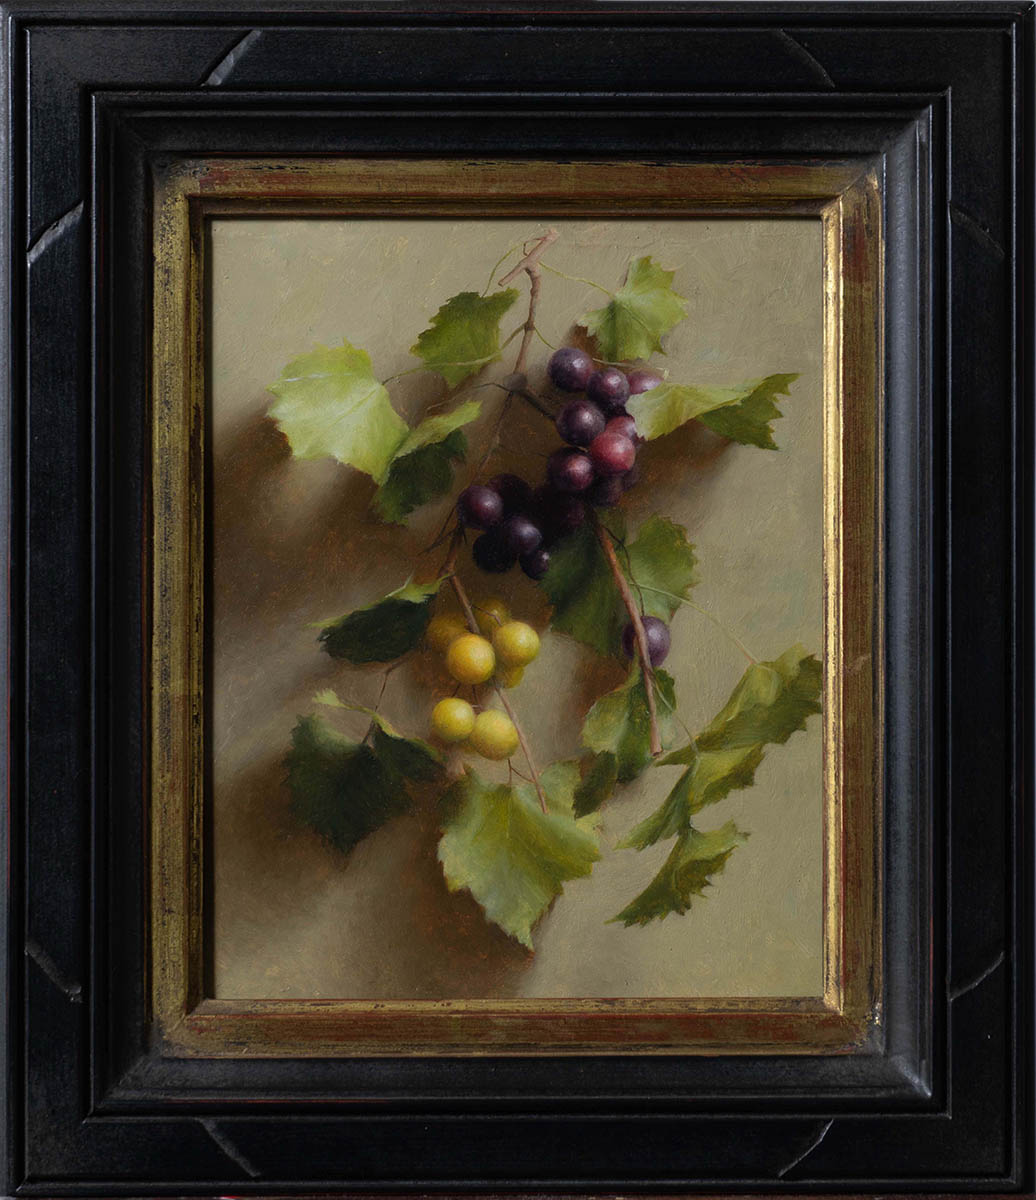 Caroline Nelson, Muscadine Grapes